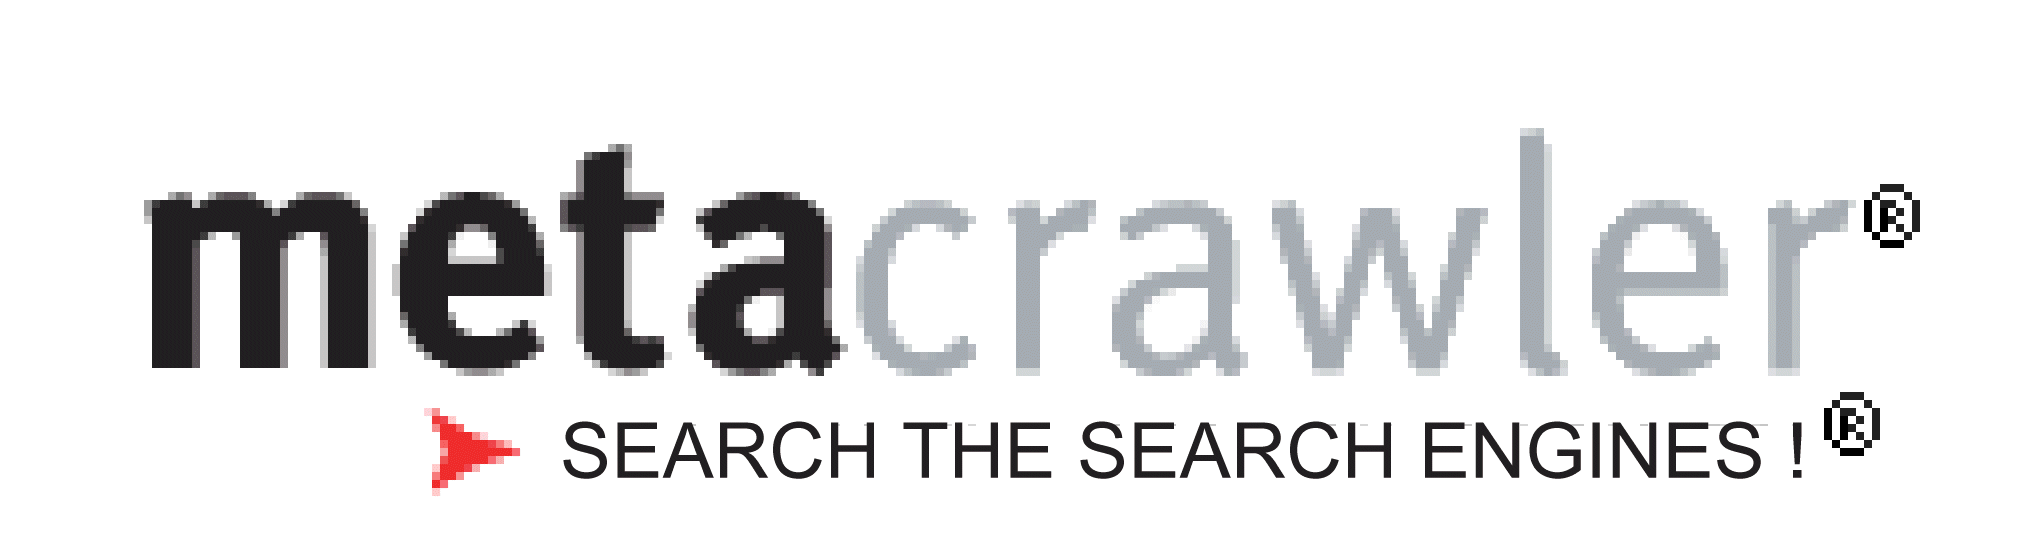 MetaCrawler Logo - INFORMATION SKILLS BY BEATRIZ GARGALLO: META CRAWLER